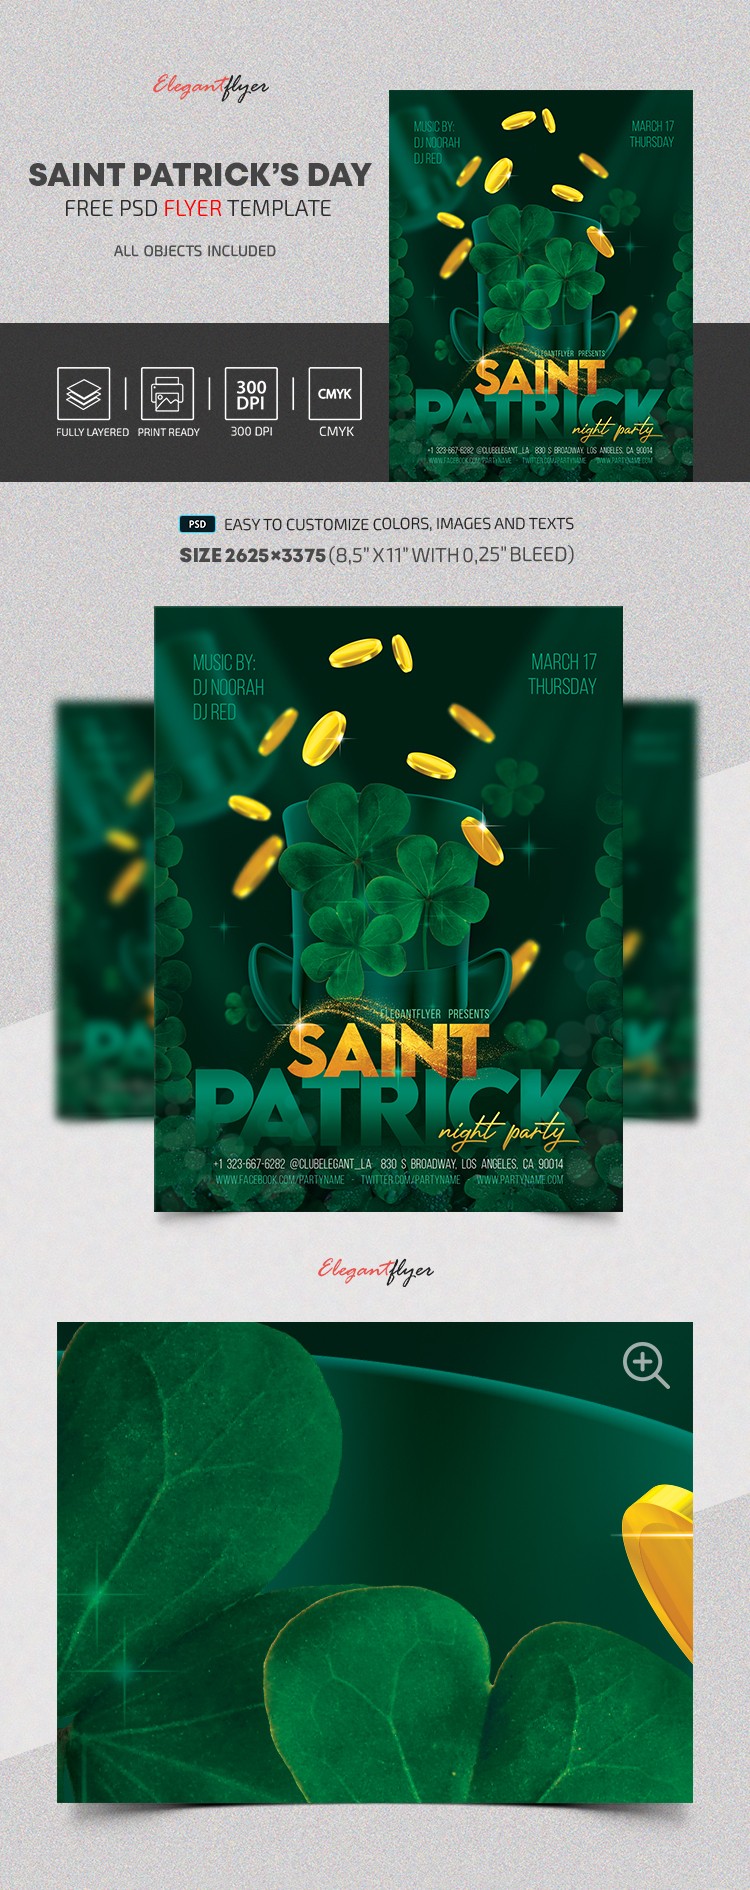 Saint Patrick's Day Flyer by ElegantFlyer